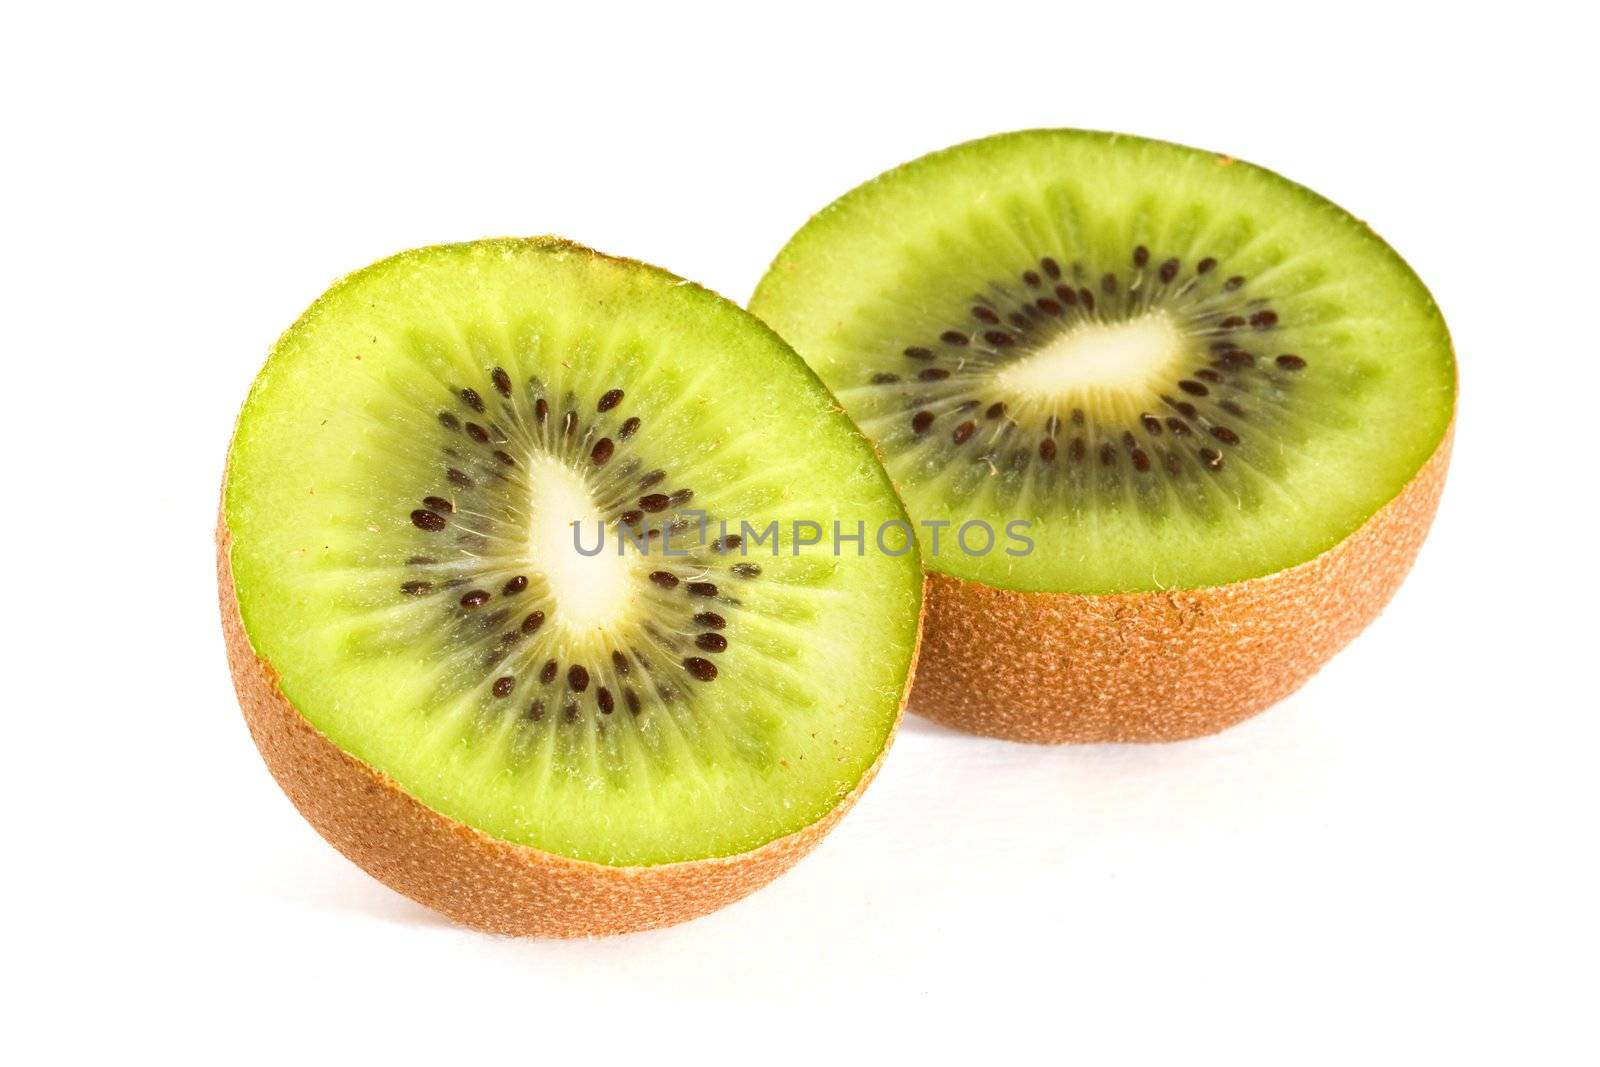 Kiwi fruit slices on a white background